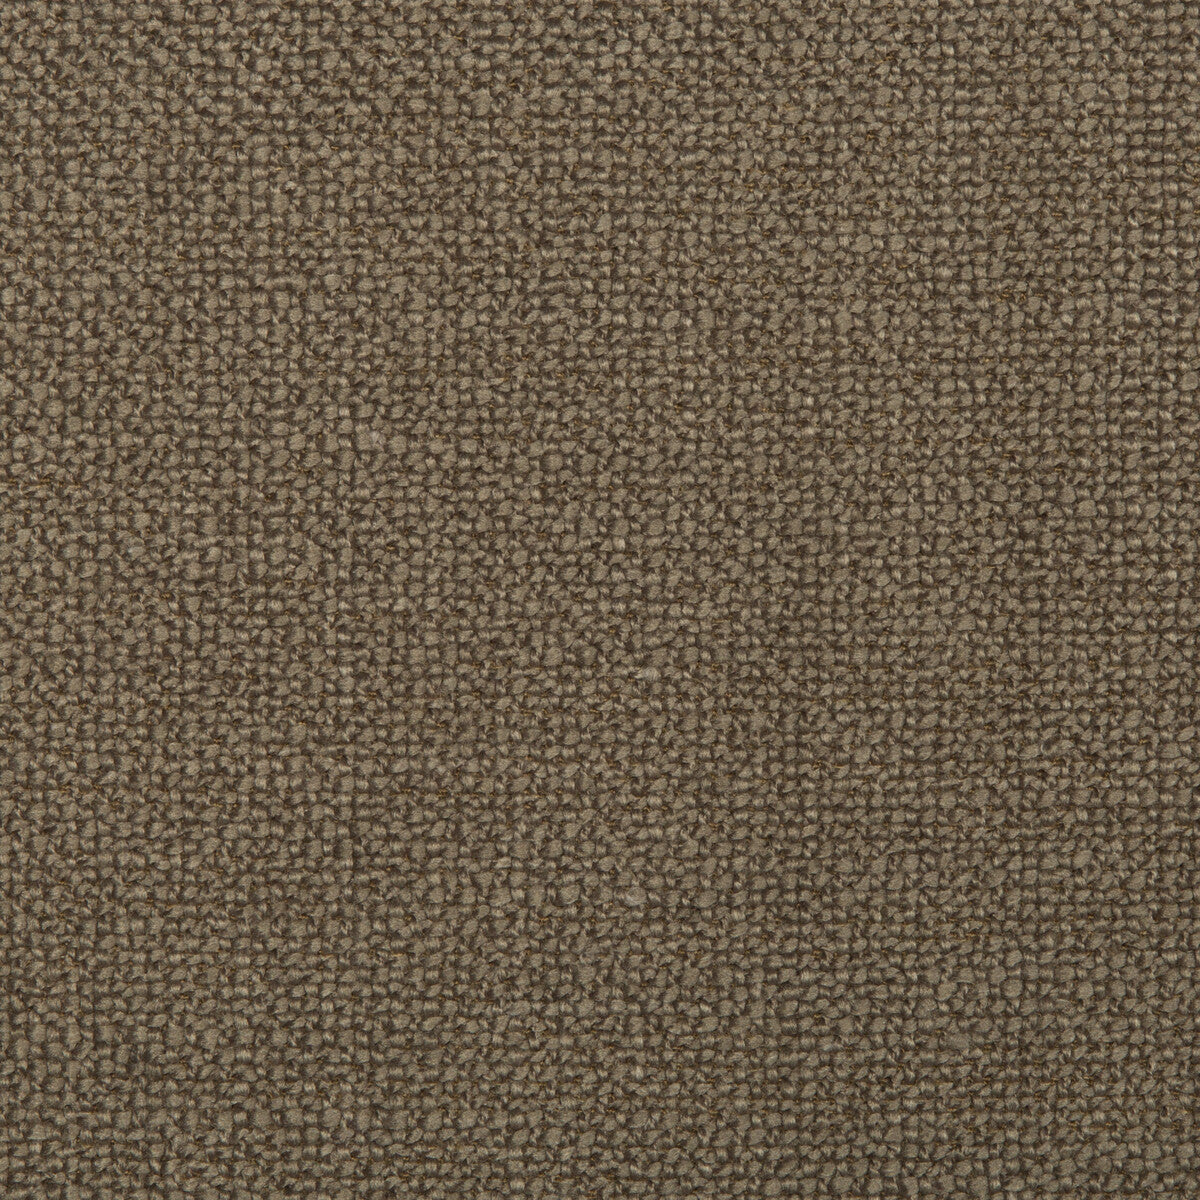 Kravet Smart fabric in 35379-106 color - pattern 35379.106.0 - by Kravet Smart in the Performance Kravetarmor collection